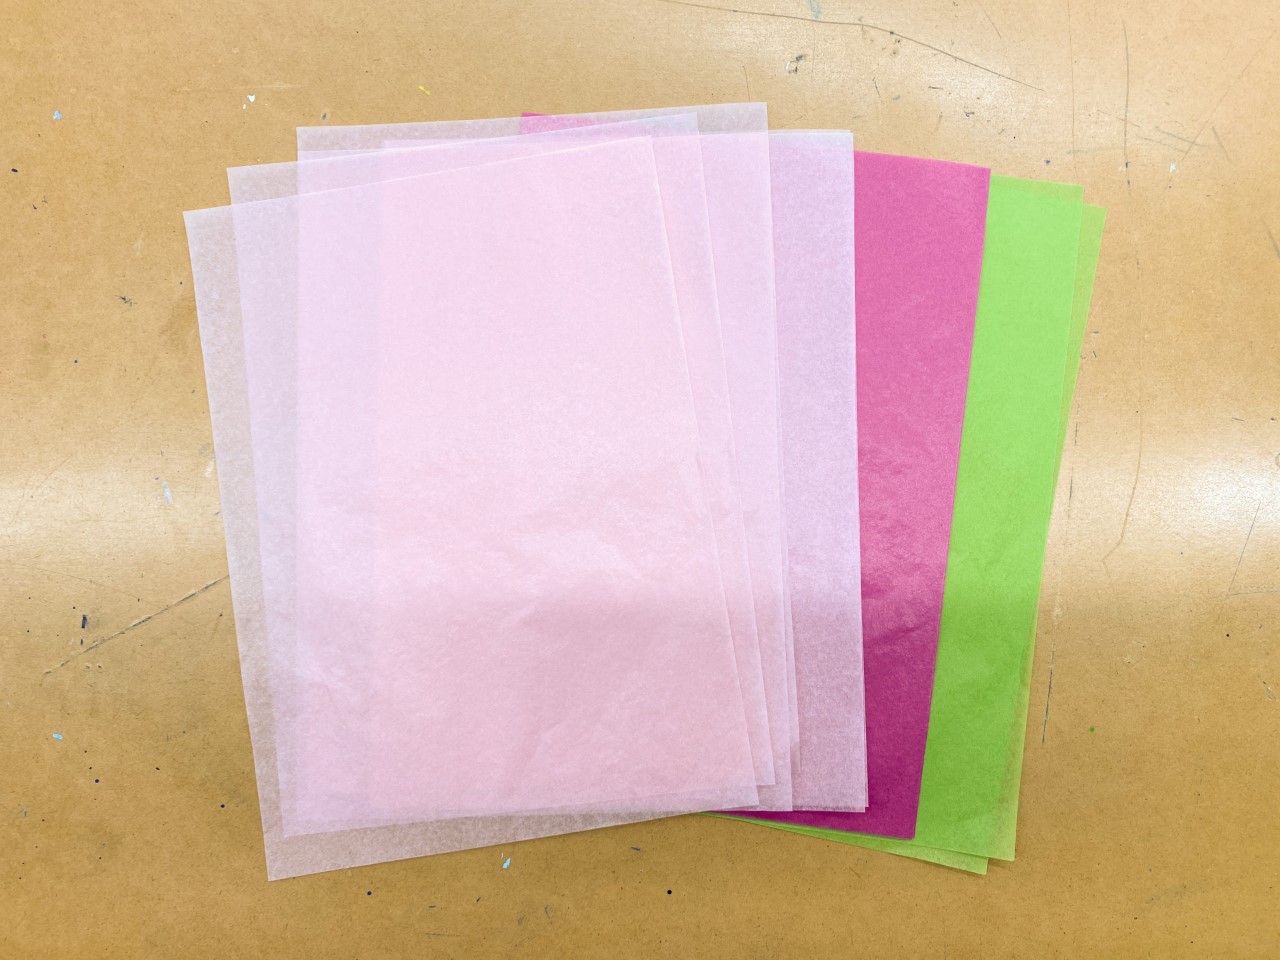 8 pieces of tissue paper